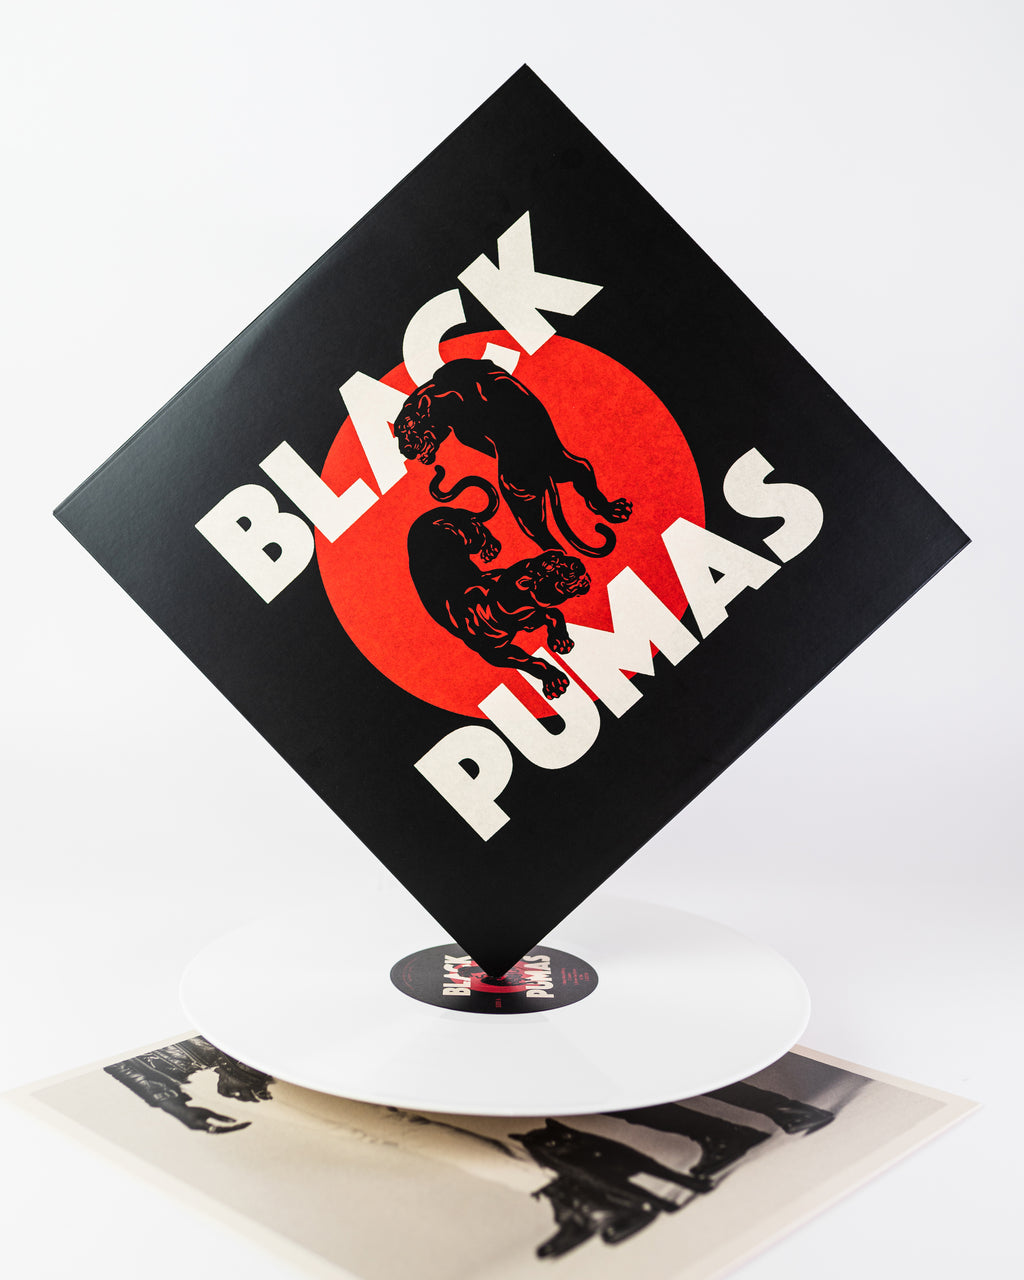 Black Pumas - Black Pumas [Cream LP] -  Music